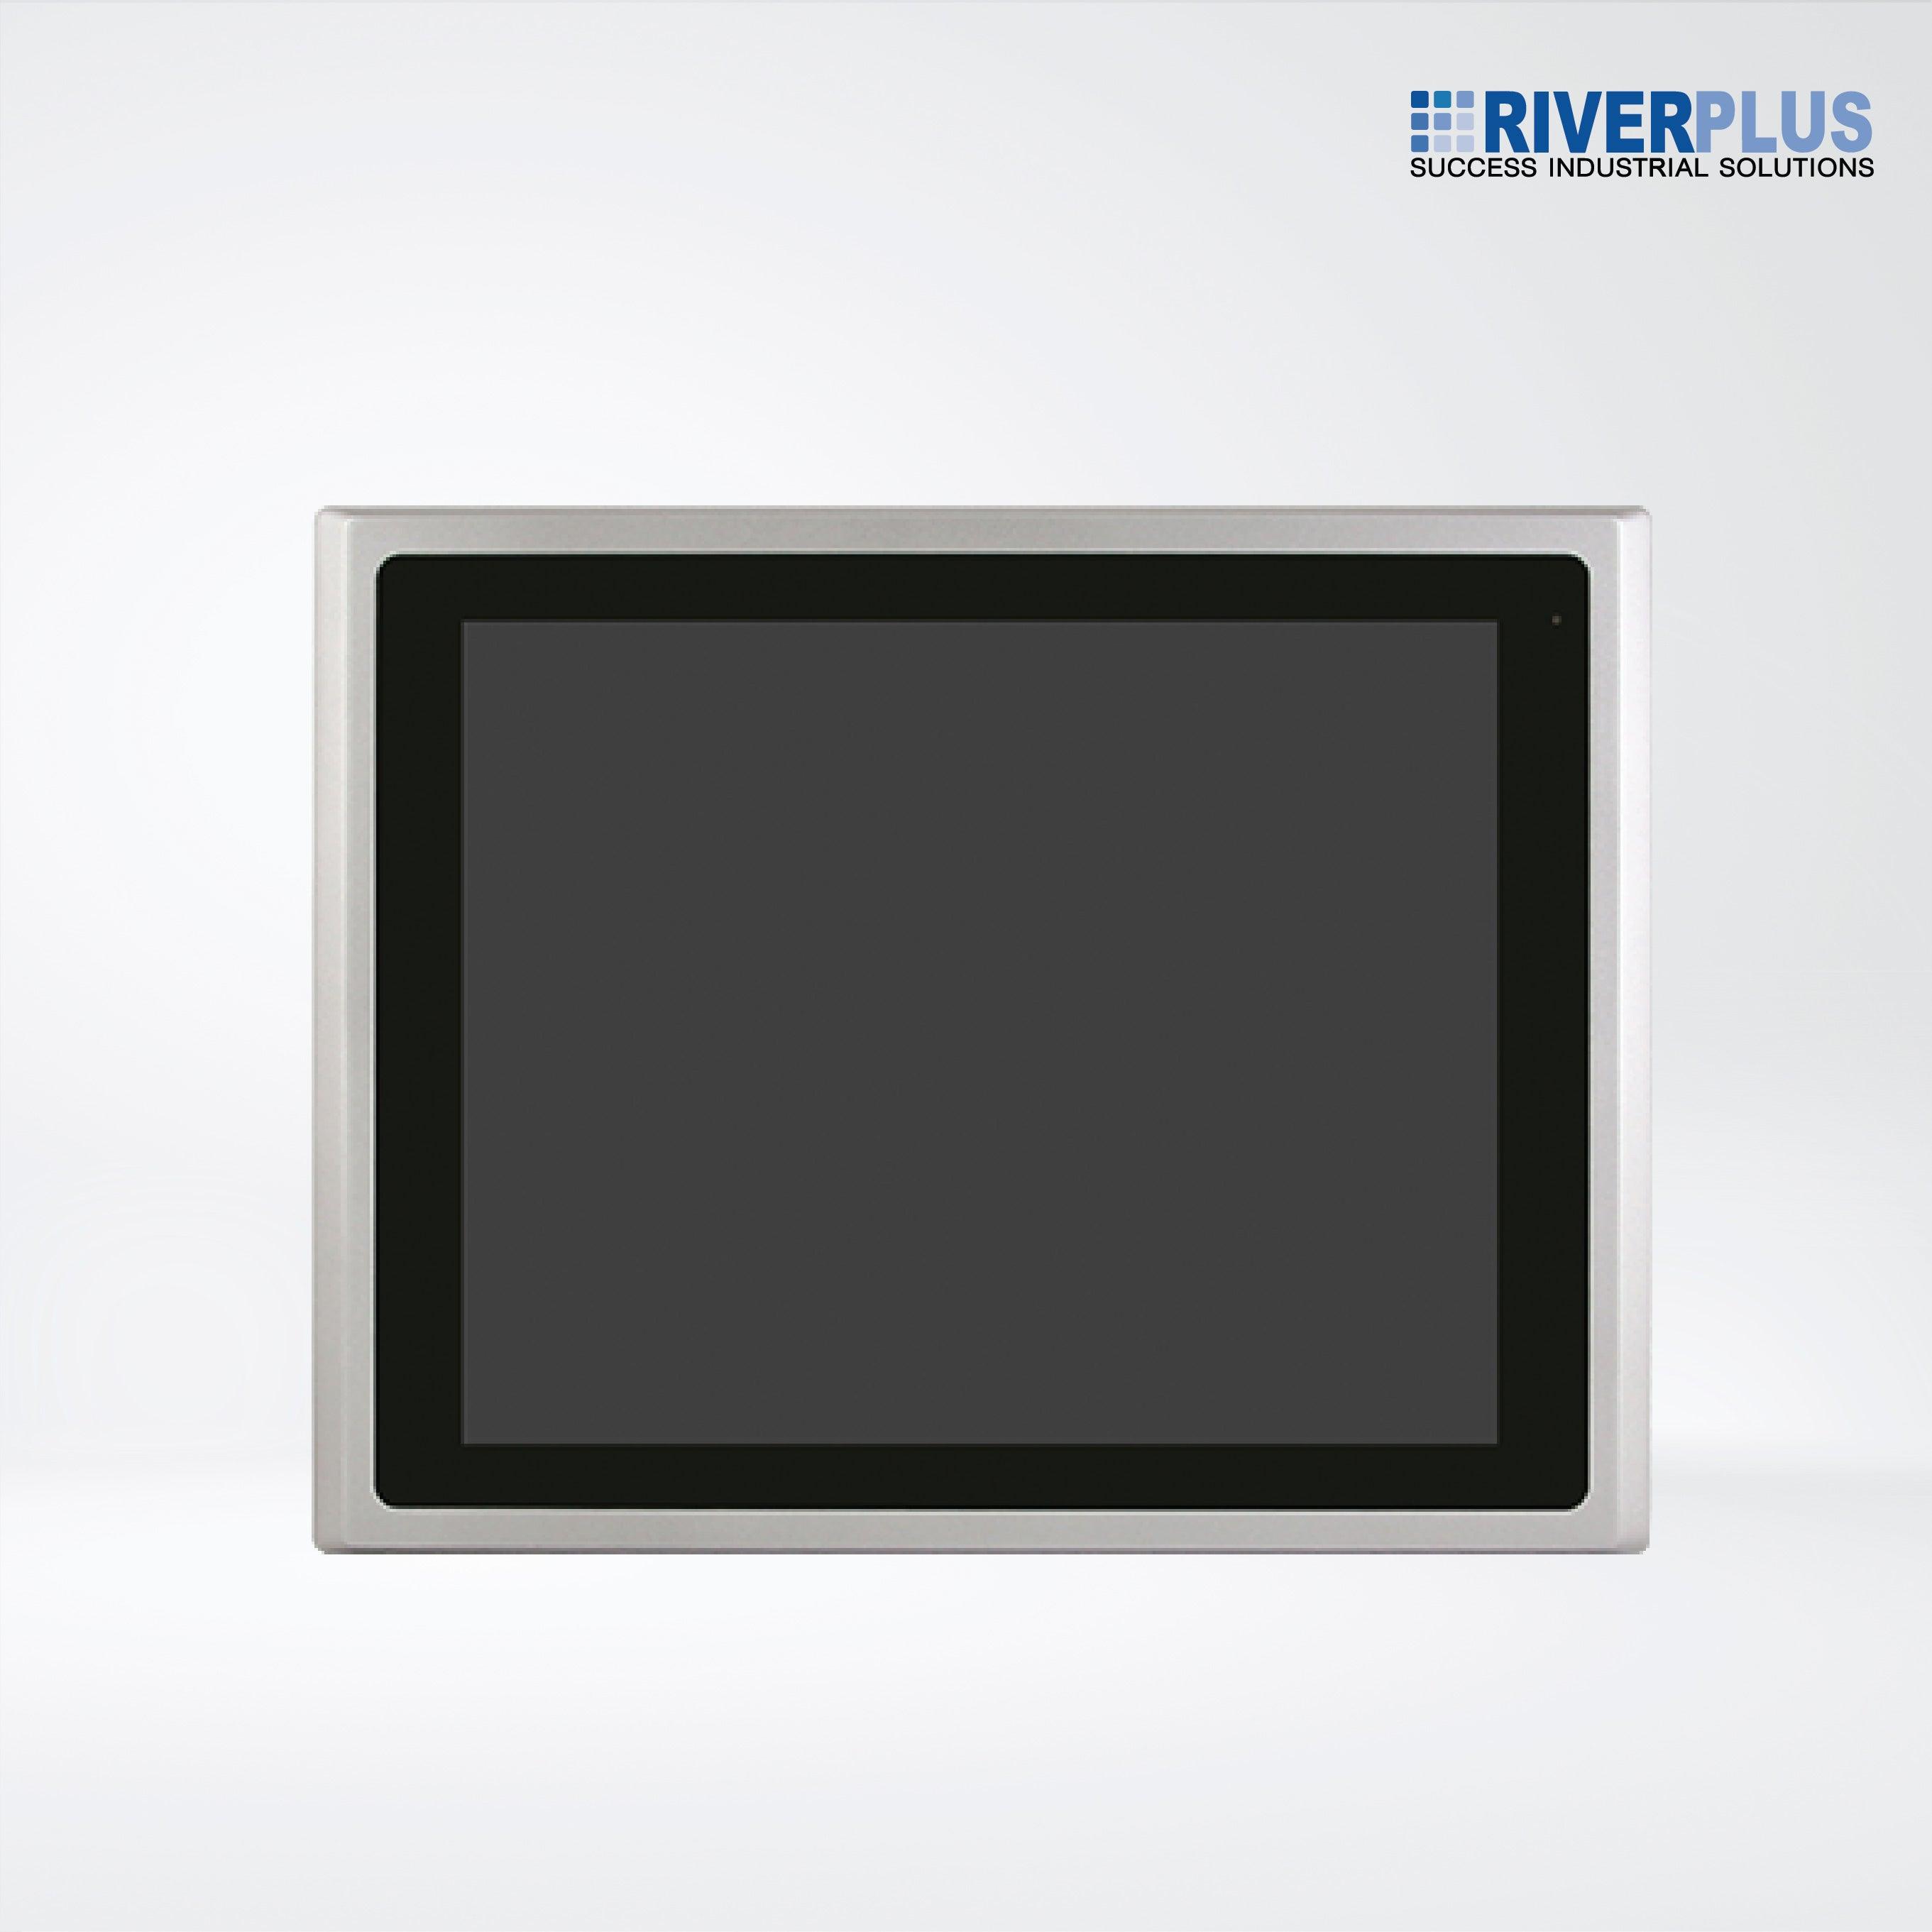 ARCHMI-817AR 17" Intel Apollo Lake N4200/N3350 Fanless Industrial Compact Size Panel PC - Riverplus